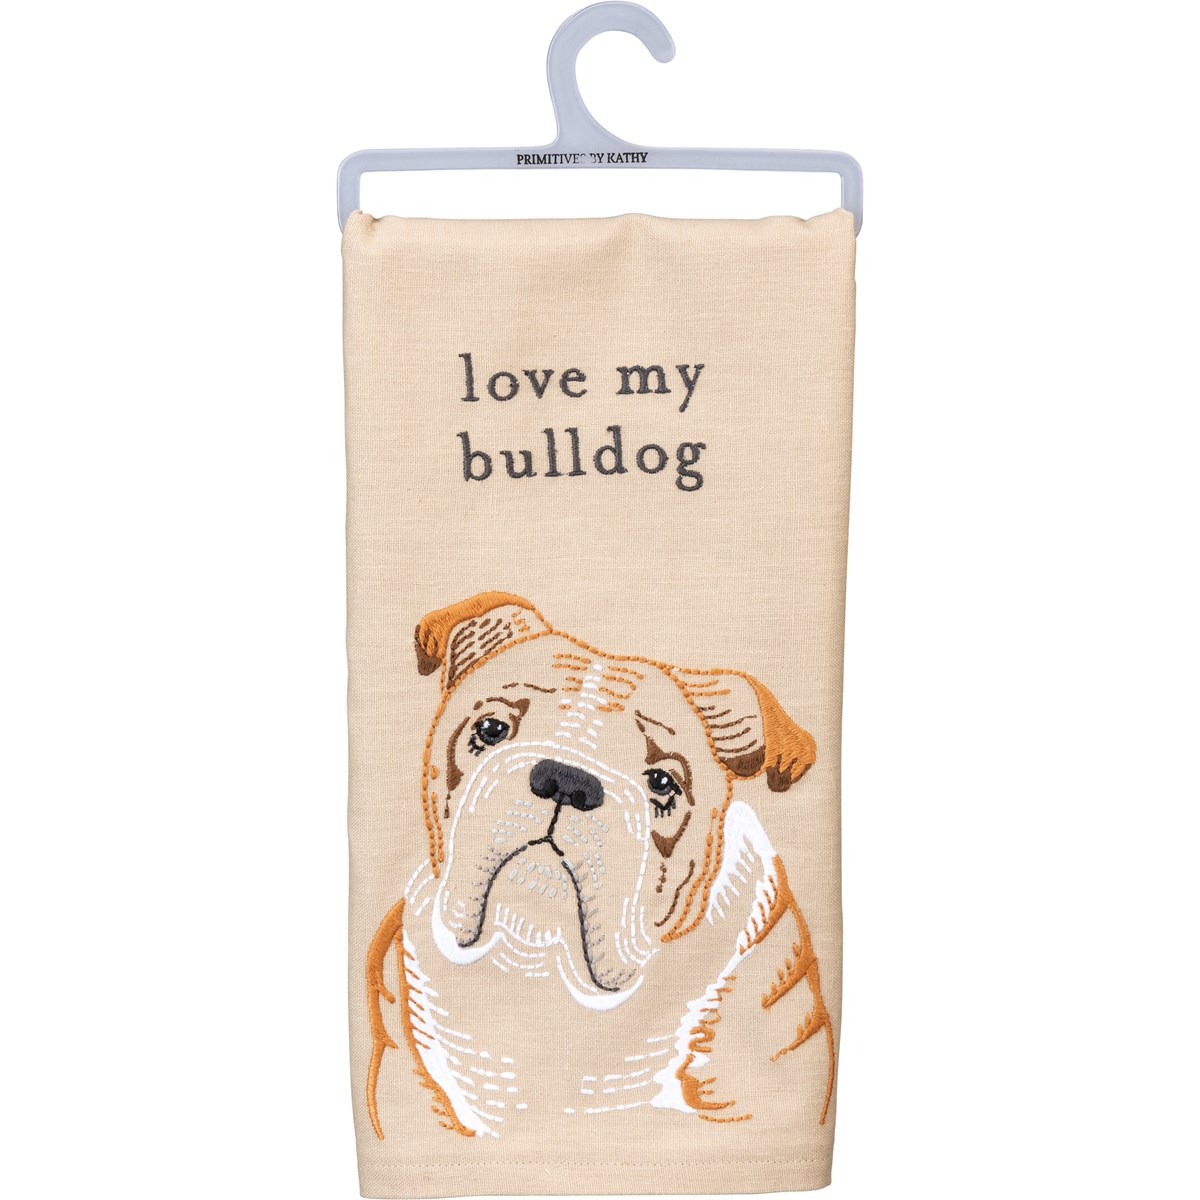 Love My Bulldog Kitchen Towel - Cotton, Linen